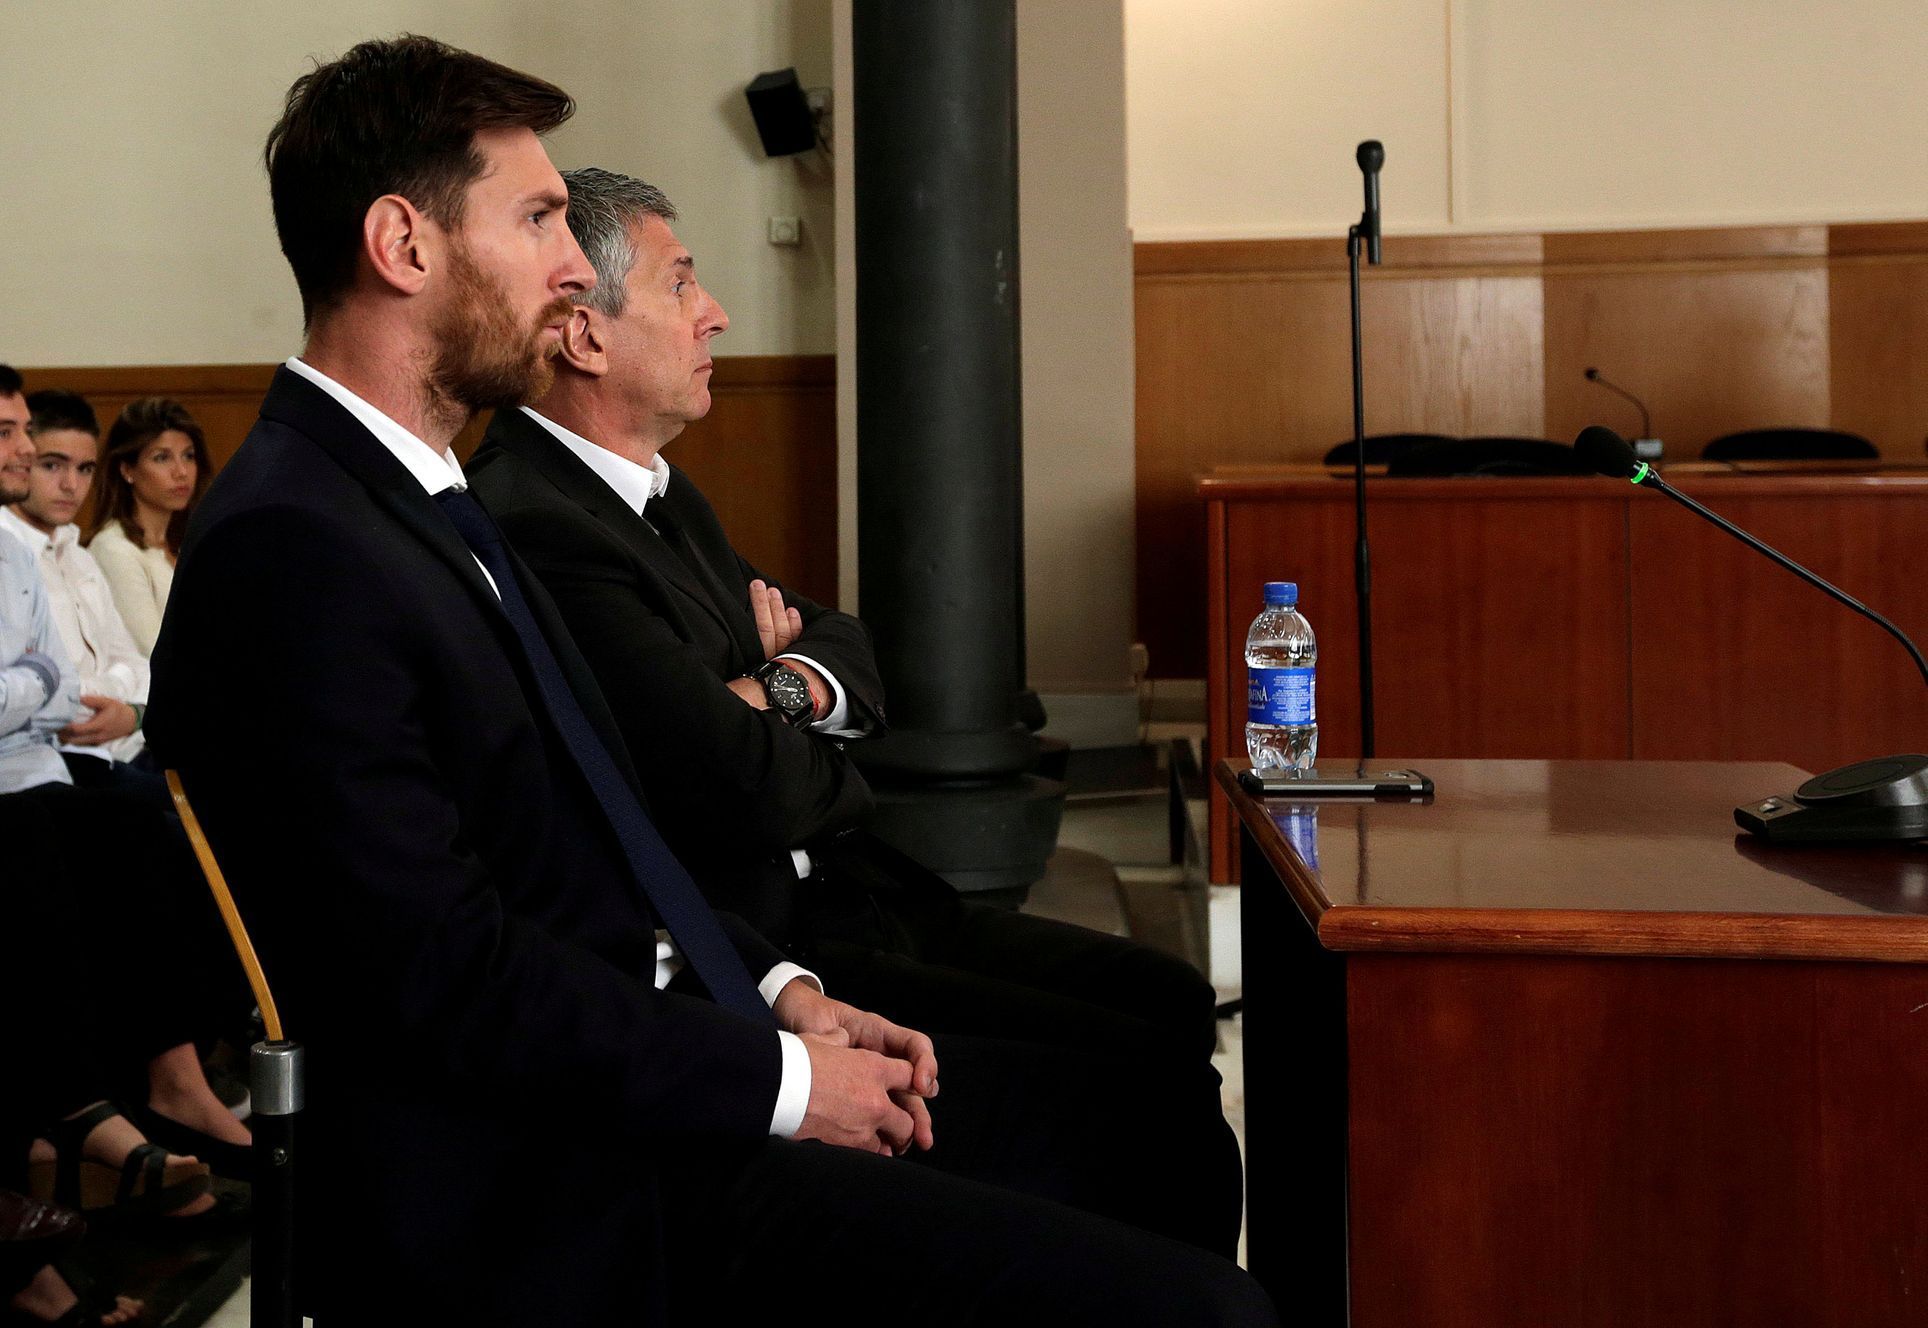 Lionel Messi a jeho otec Jorge před soudem v Barceloně